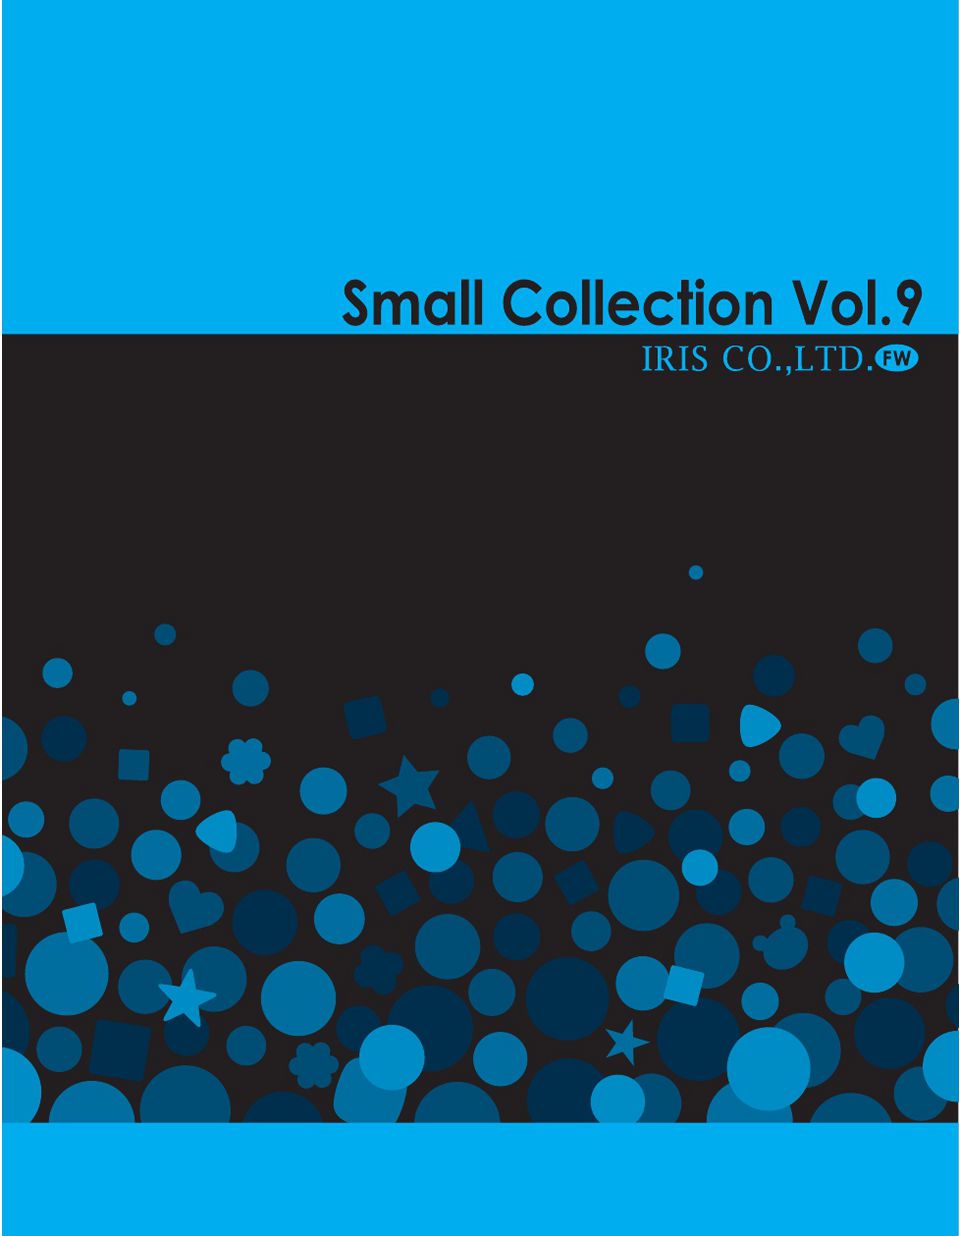 IRIS-SAMPLE-FW Small Collection Vol.9[Sample Card] IRIS